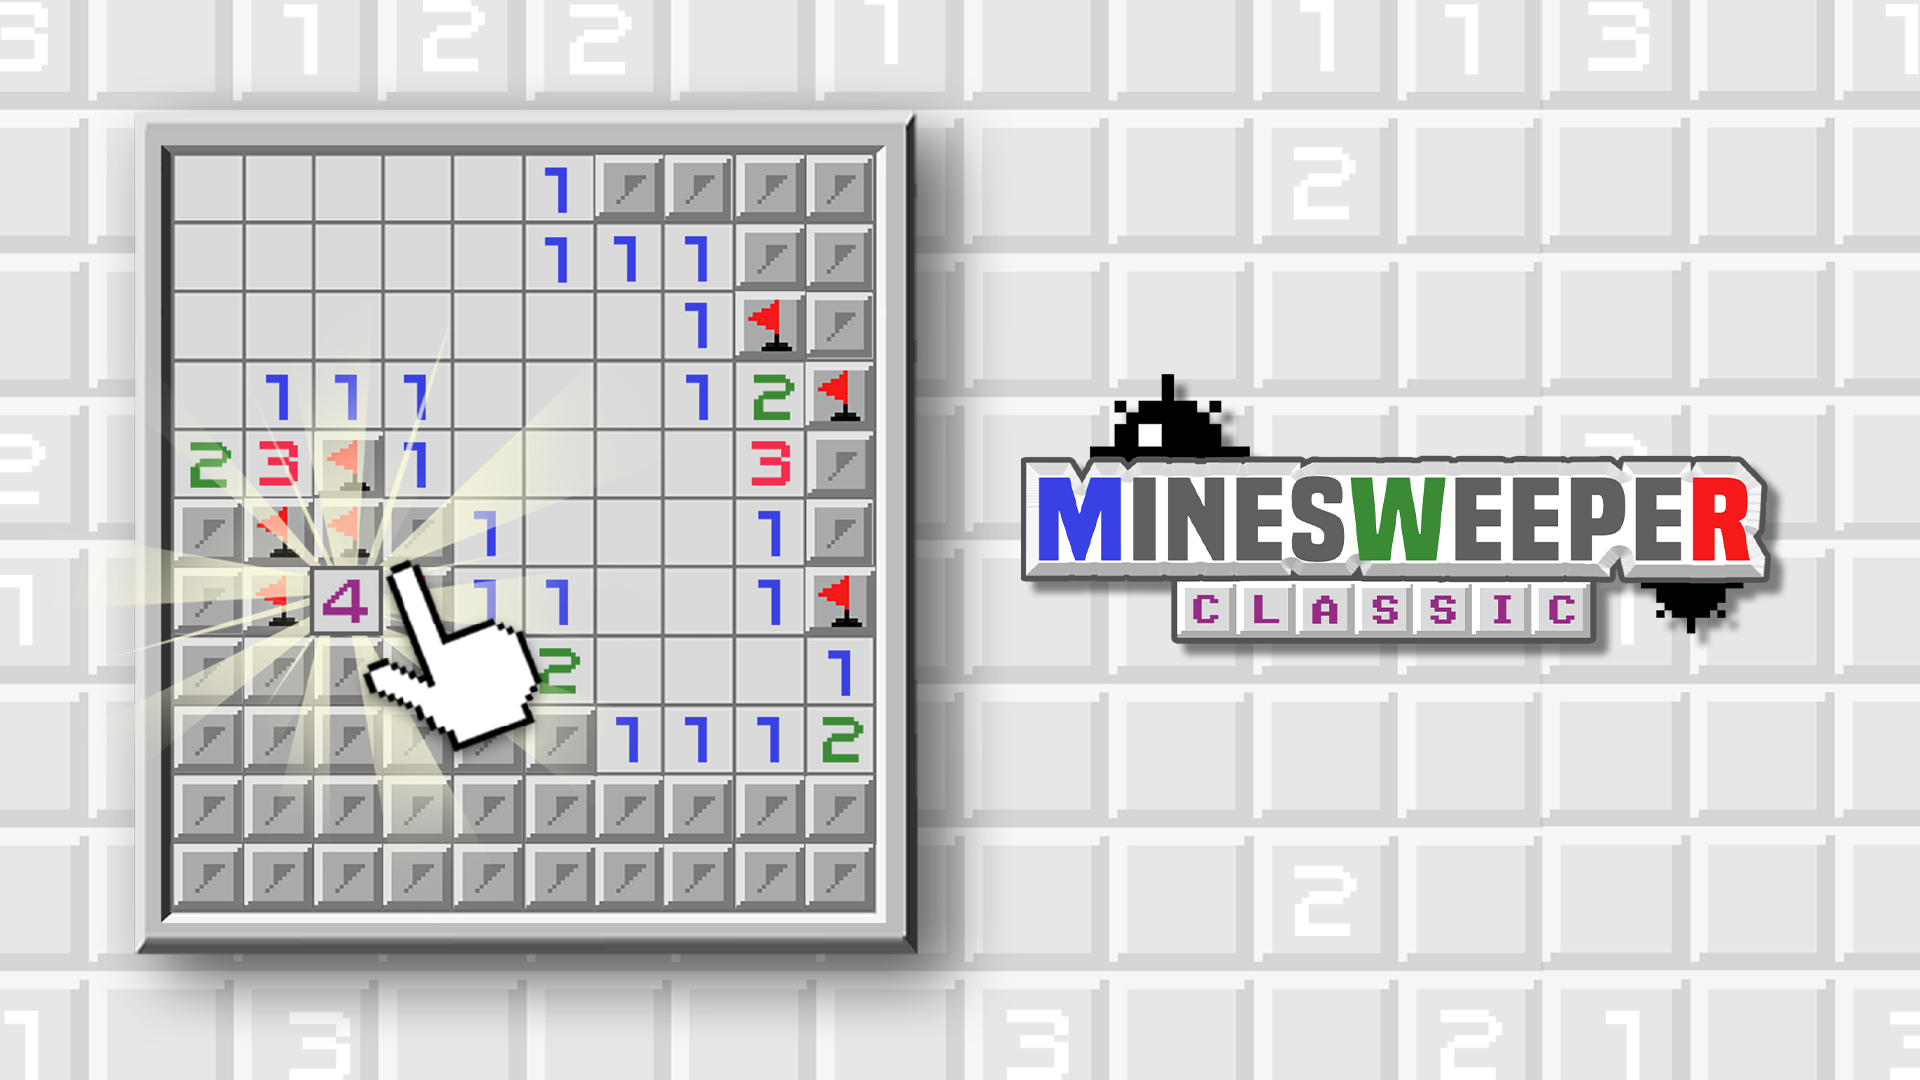 Campo Minado, Minesweeper